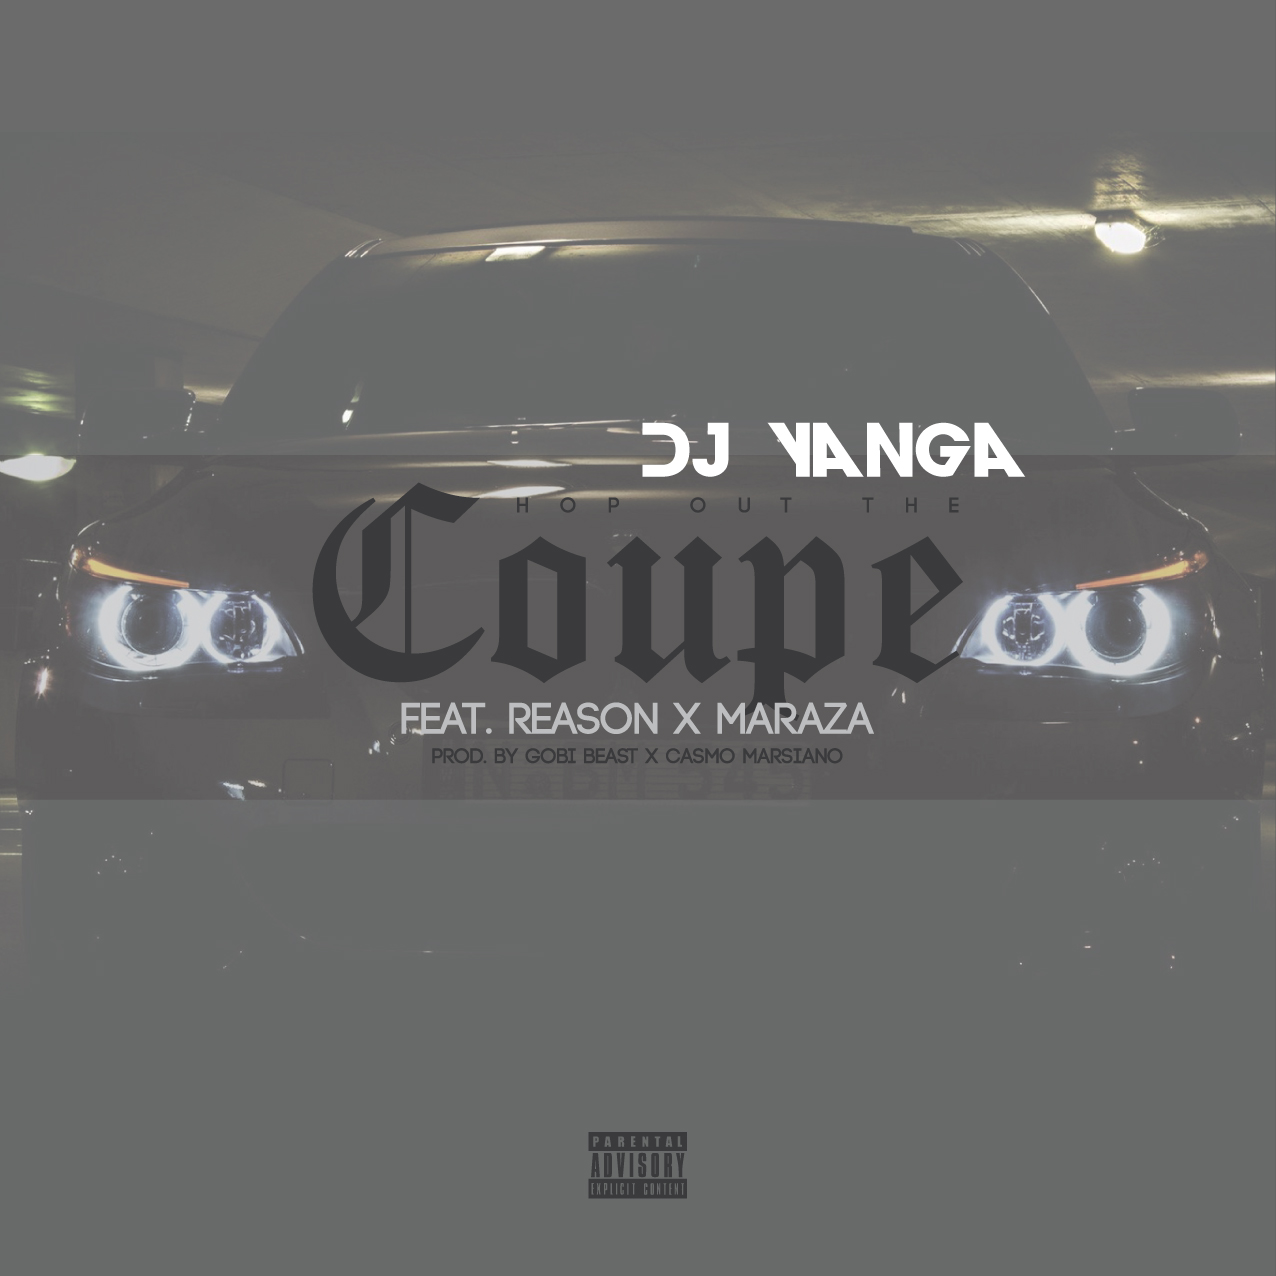 New Release: DJ Yanga - Hop Out The Coupe [ft Reason, Maraza]